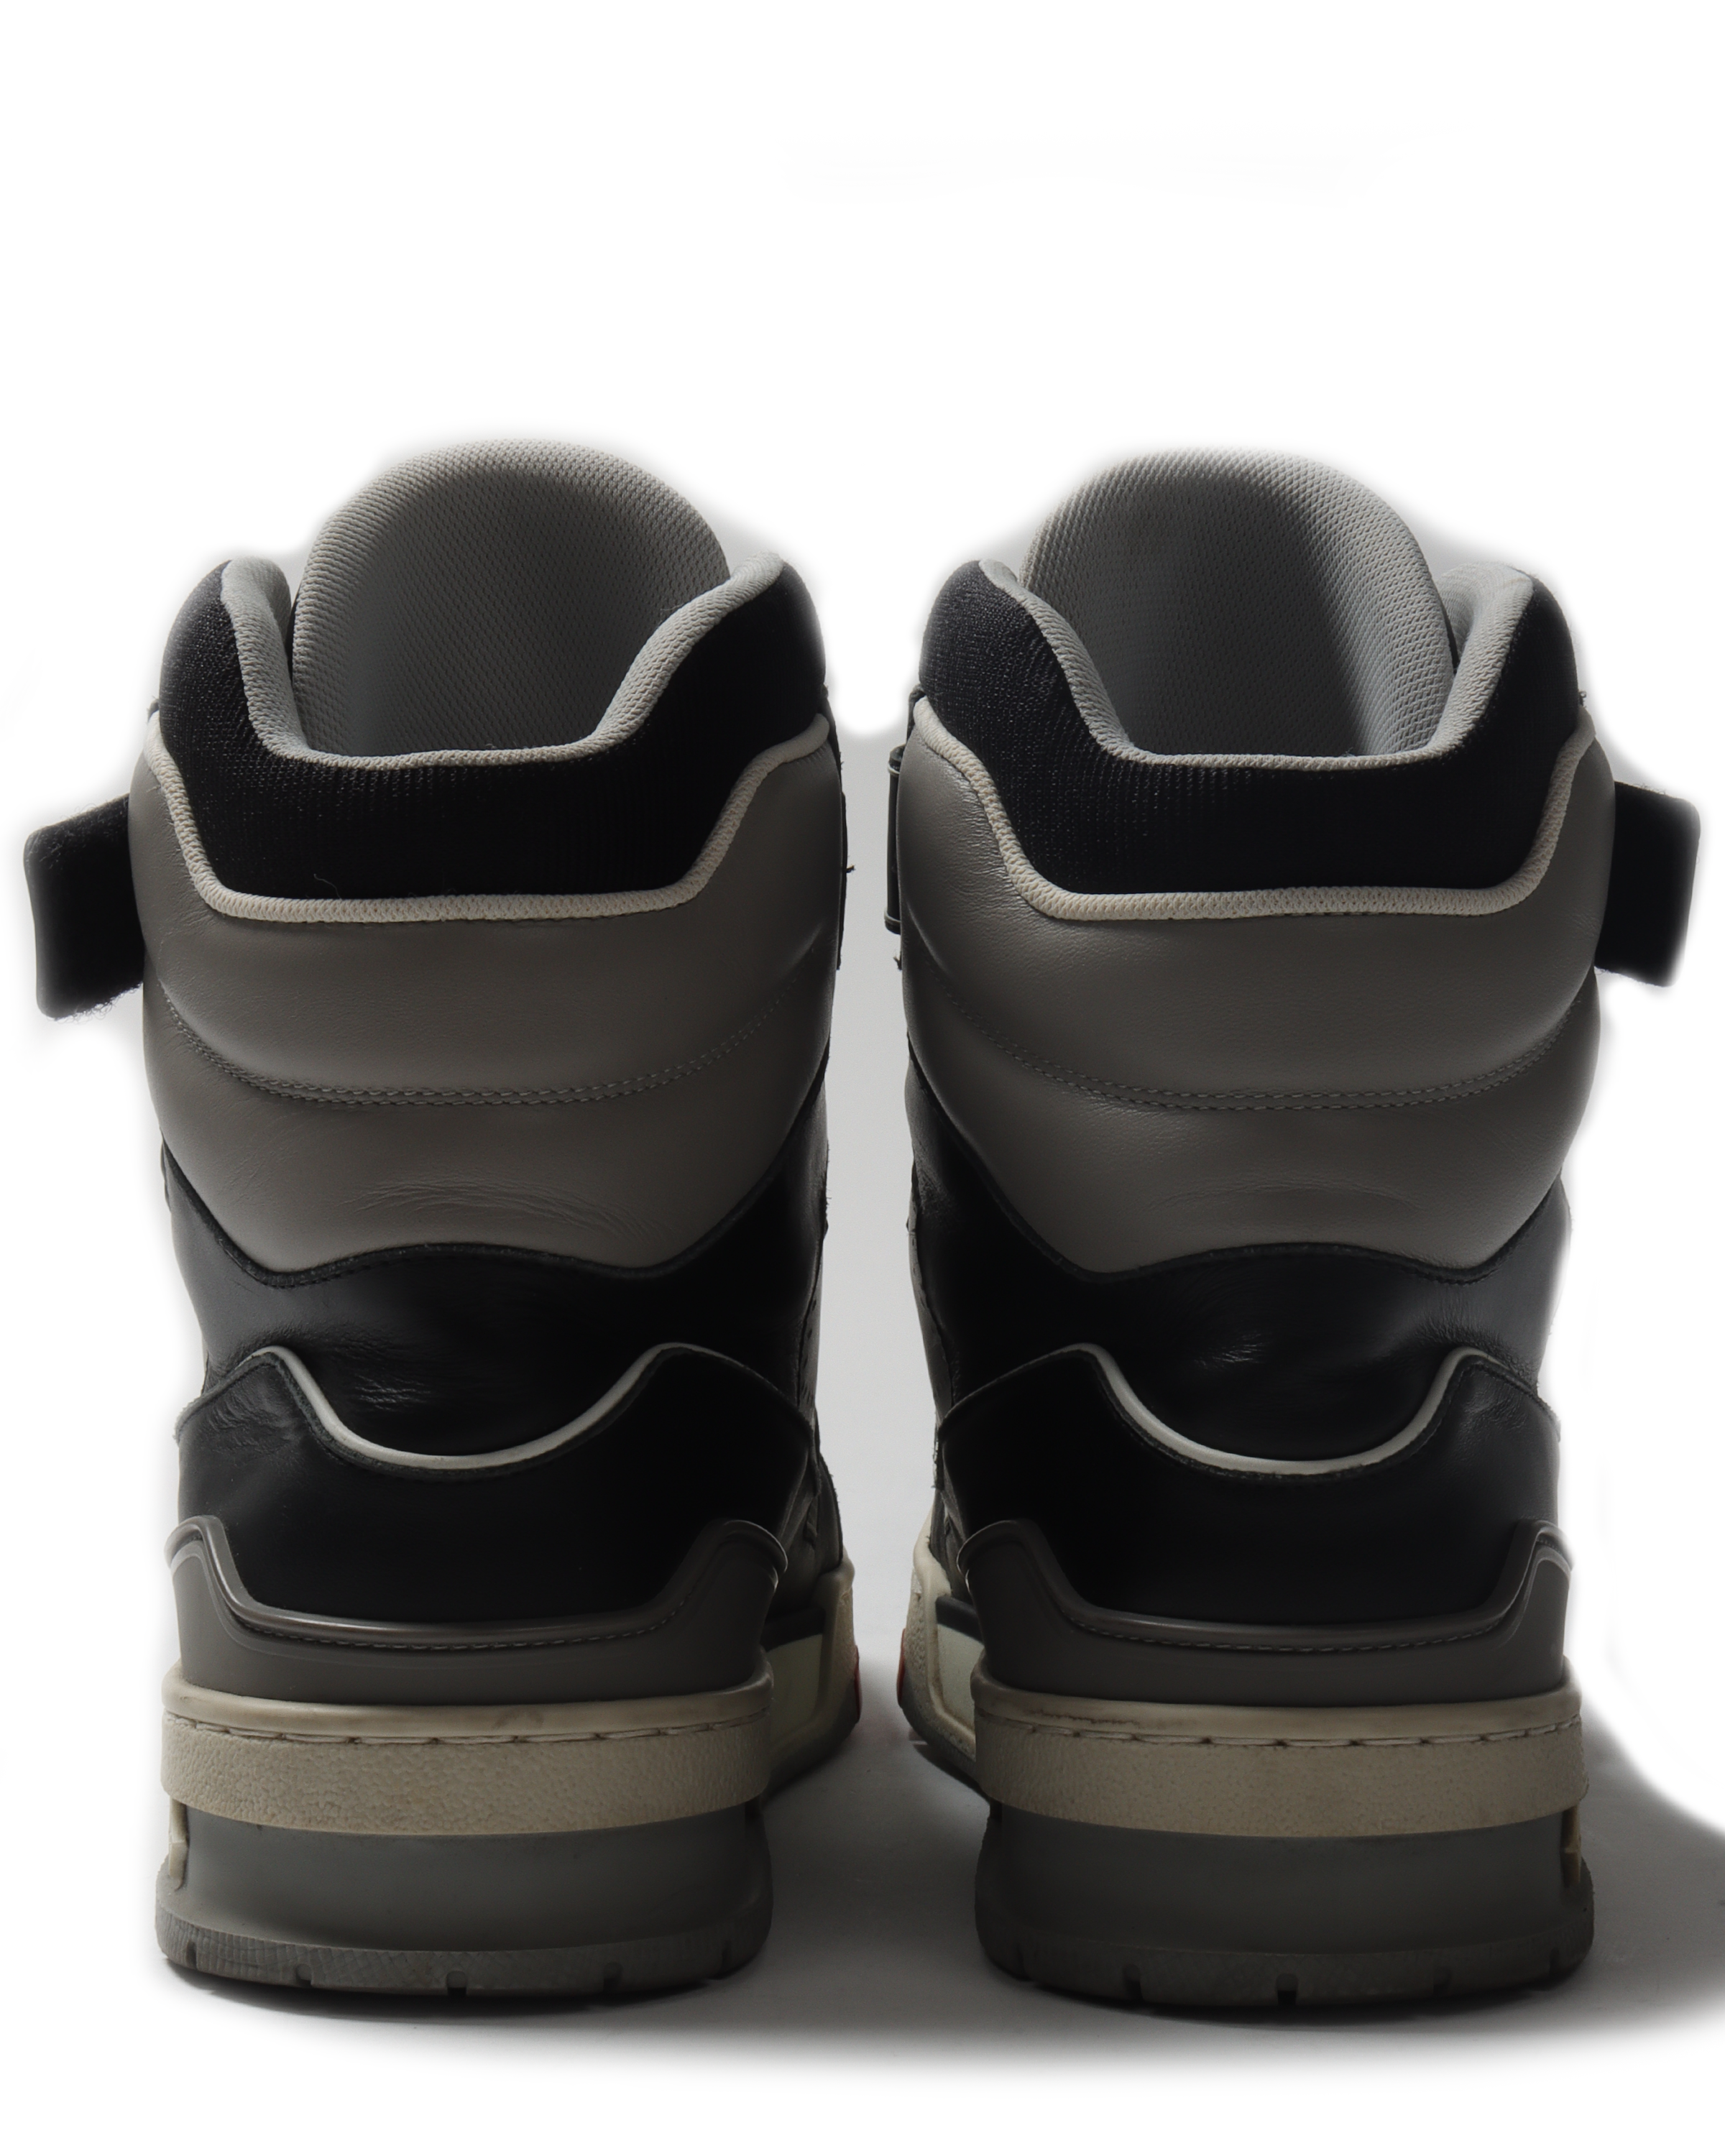 louis vuitton lv trainer sneaker boot black grey